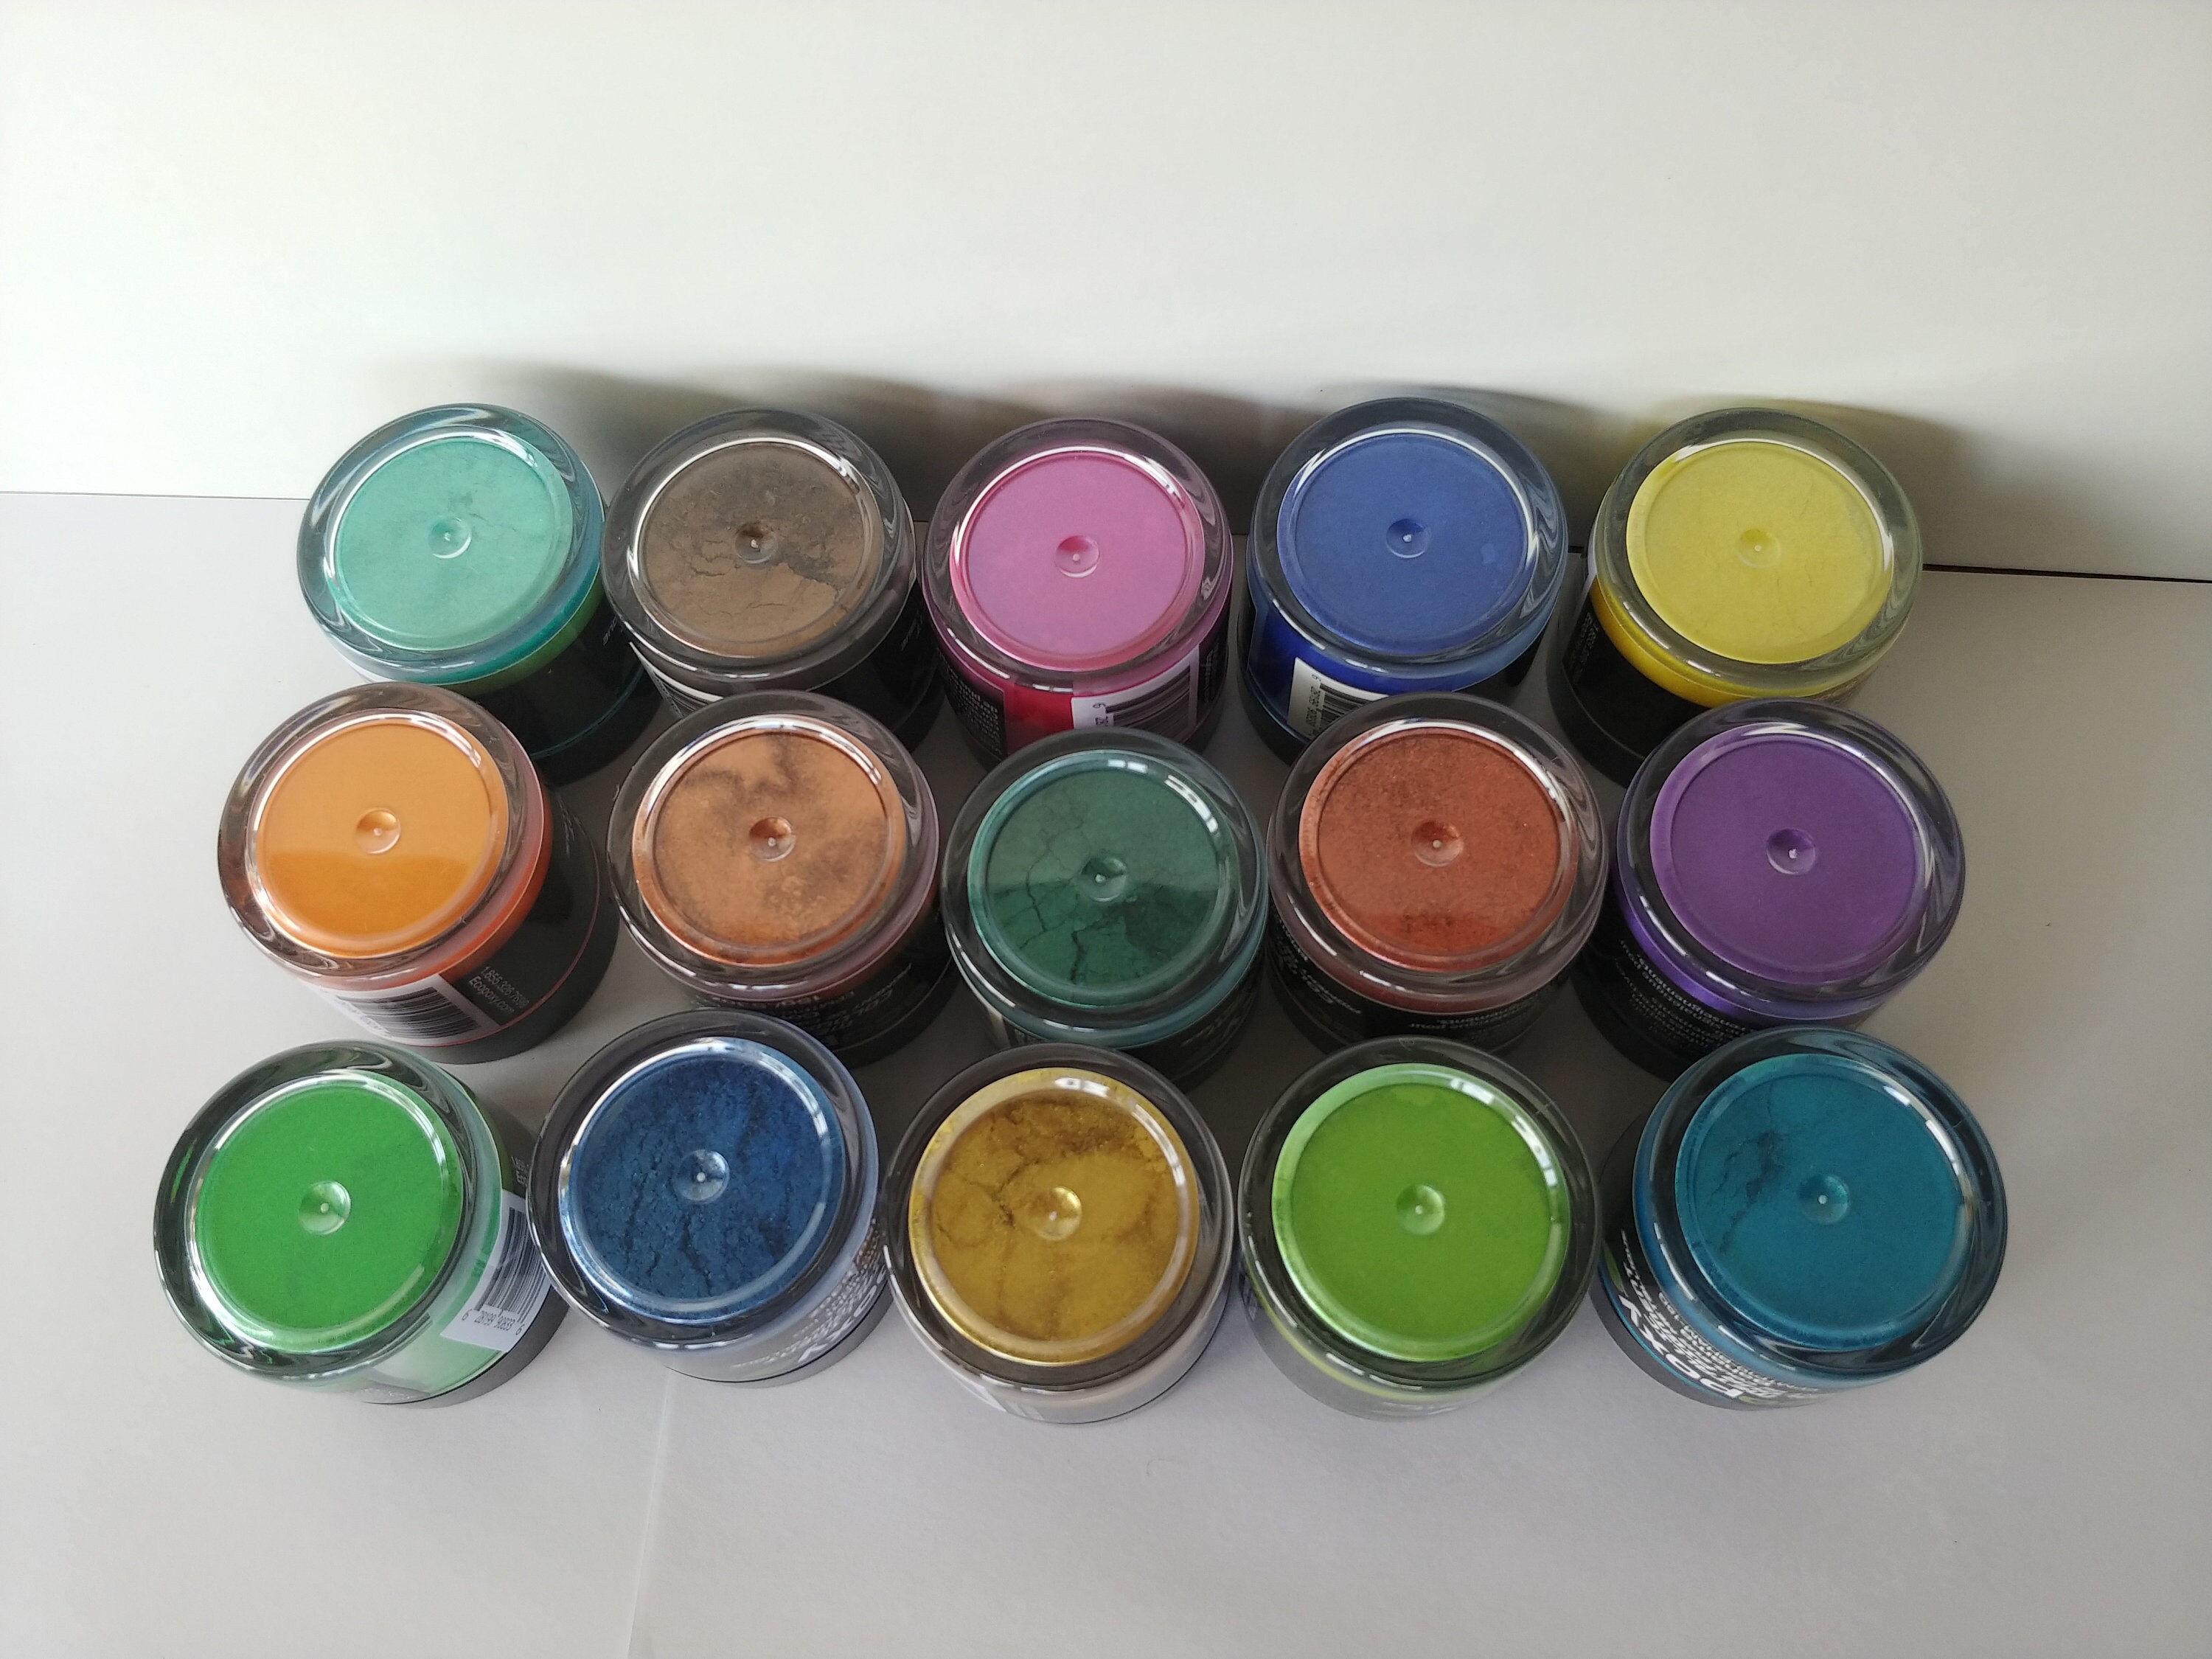 Ecopoxy New Metallic Color Pigments 15g (15 Pack)